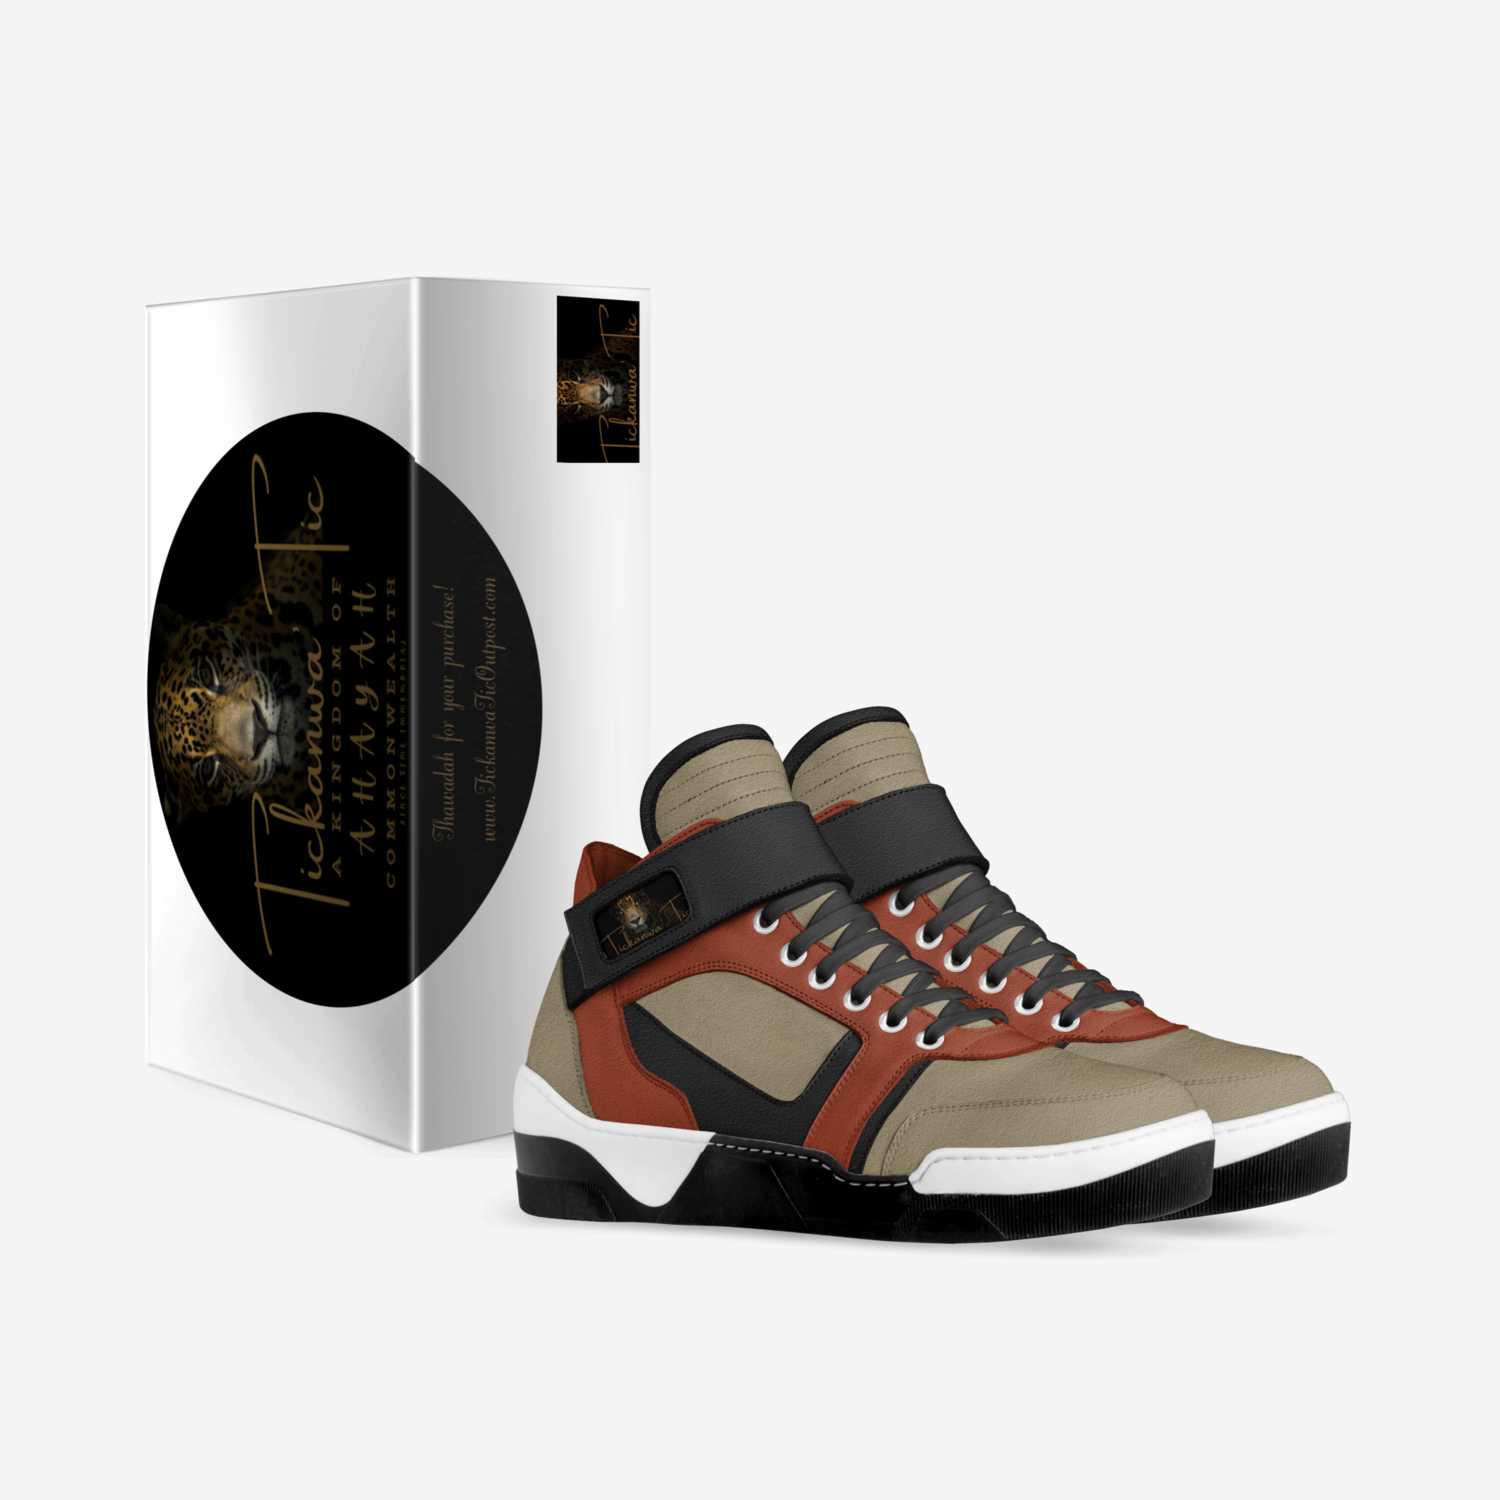 True Ibri custom made in Italy shoes by Tickanwa'Tic Kingdom Commonwealth | Box view